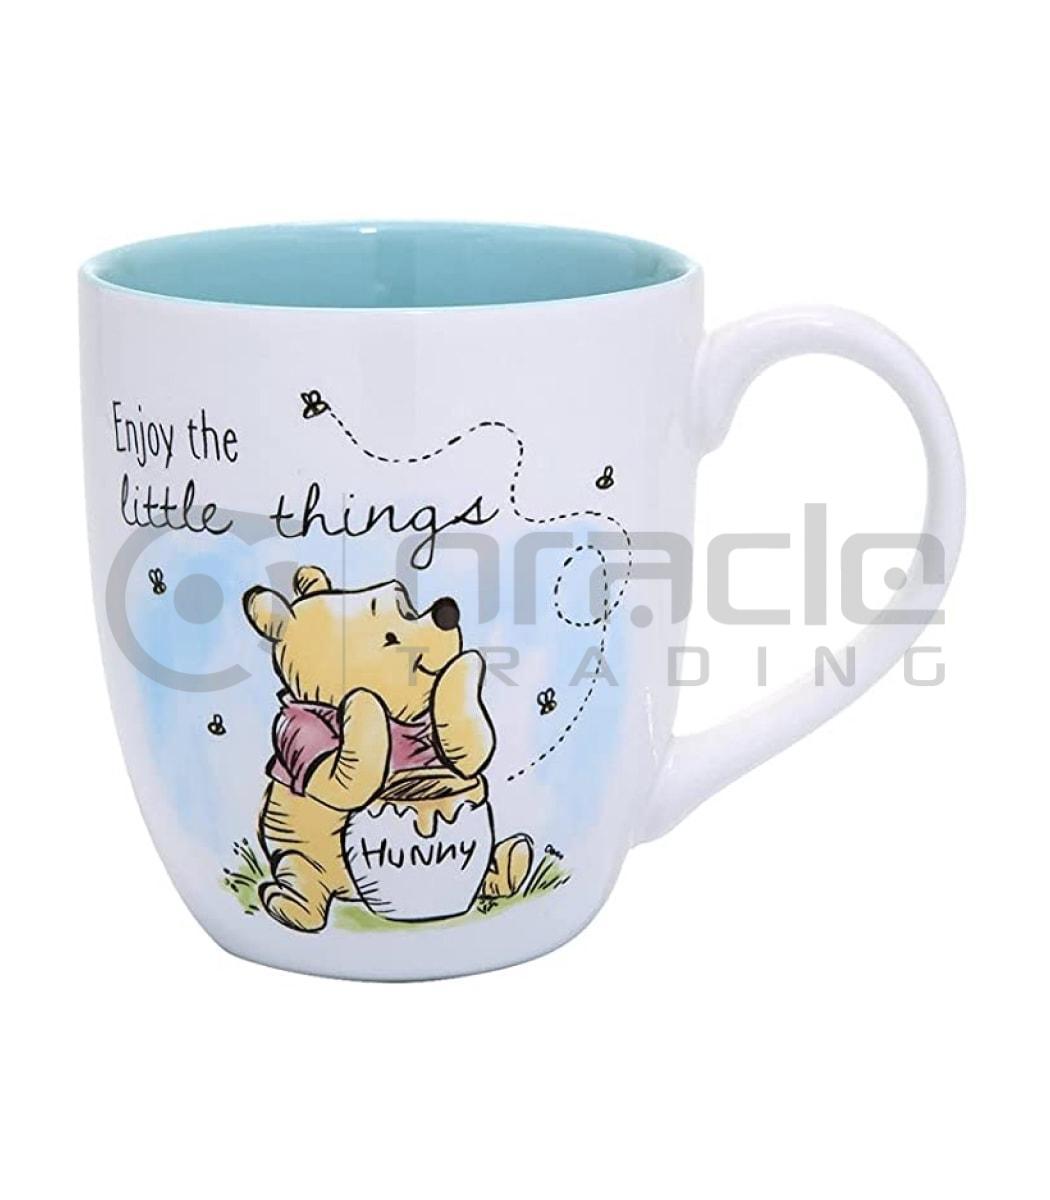 Winnie the Pooh Tall Mug - The Little Things